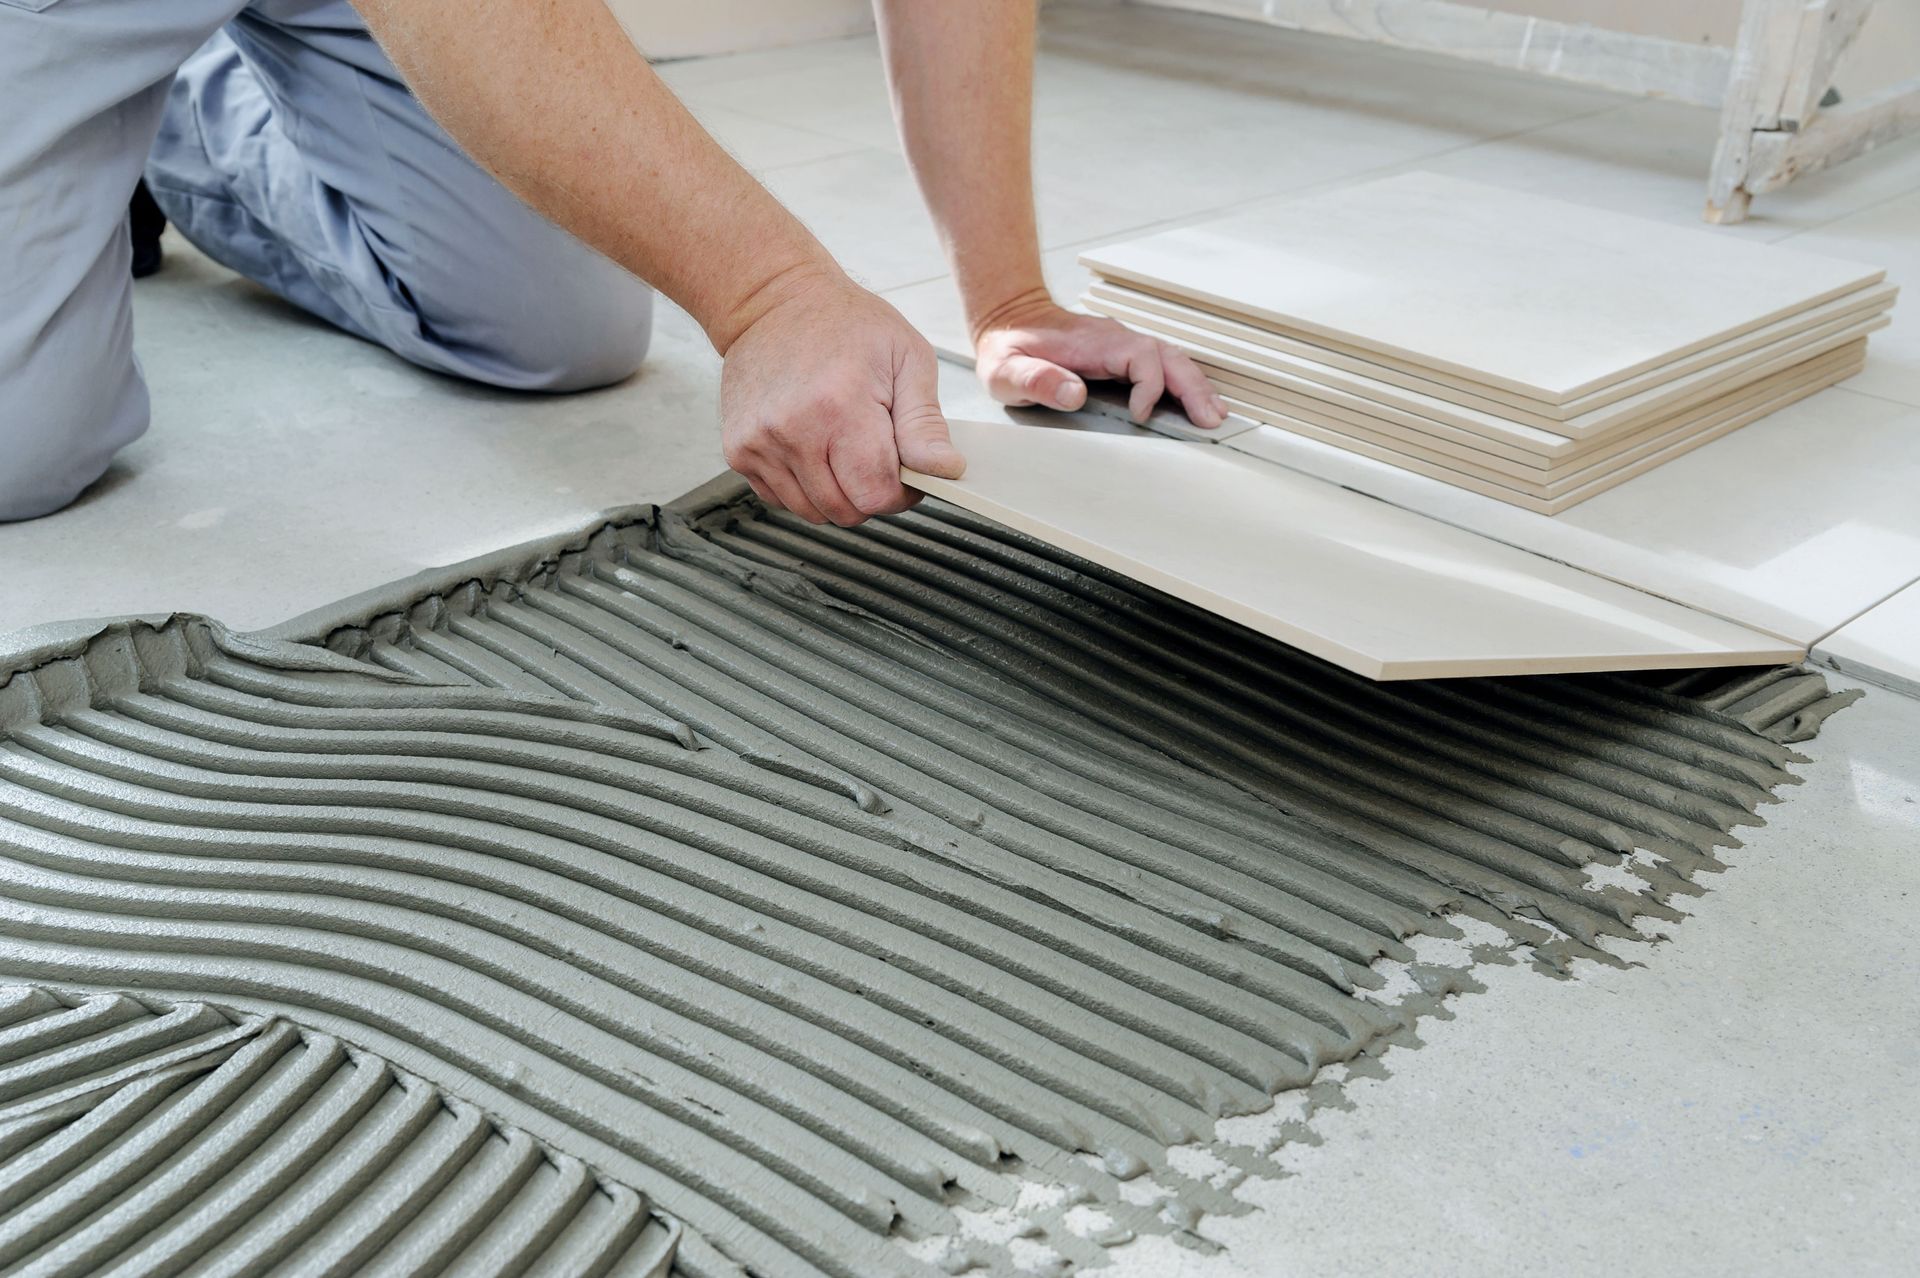 Tile Flooring Service in Vernon, CT